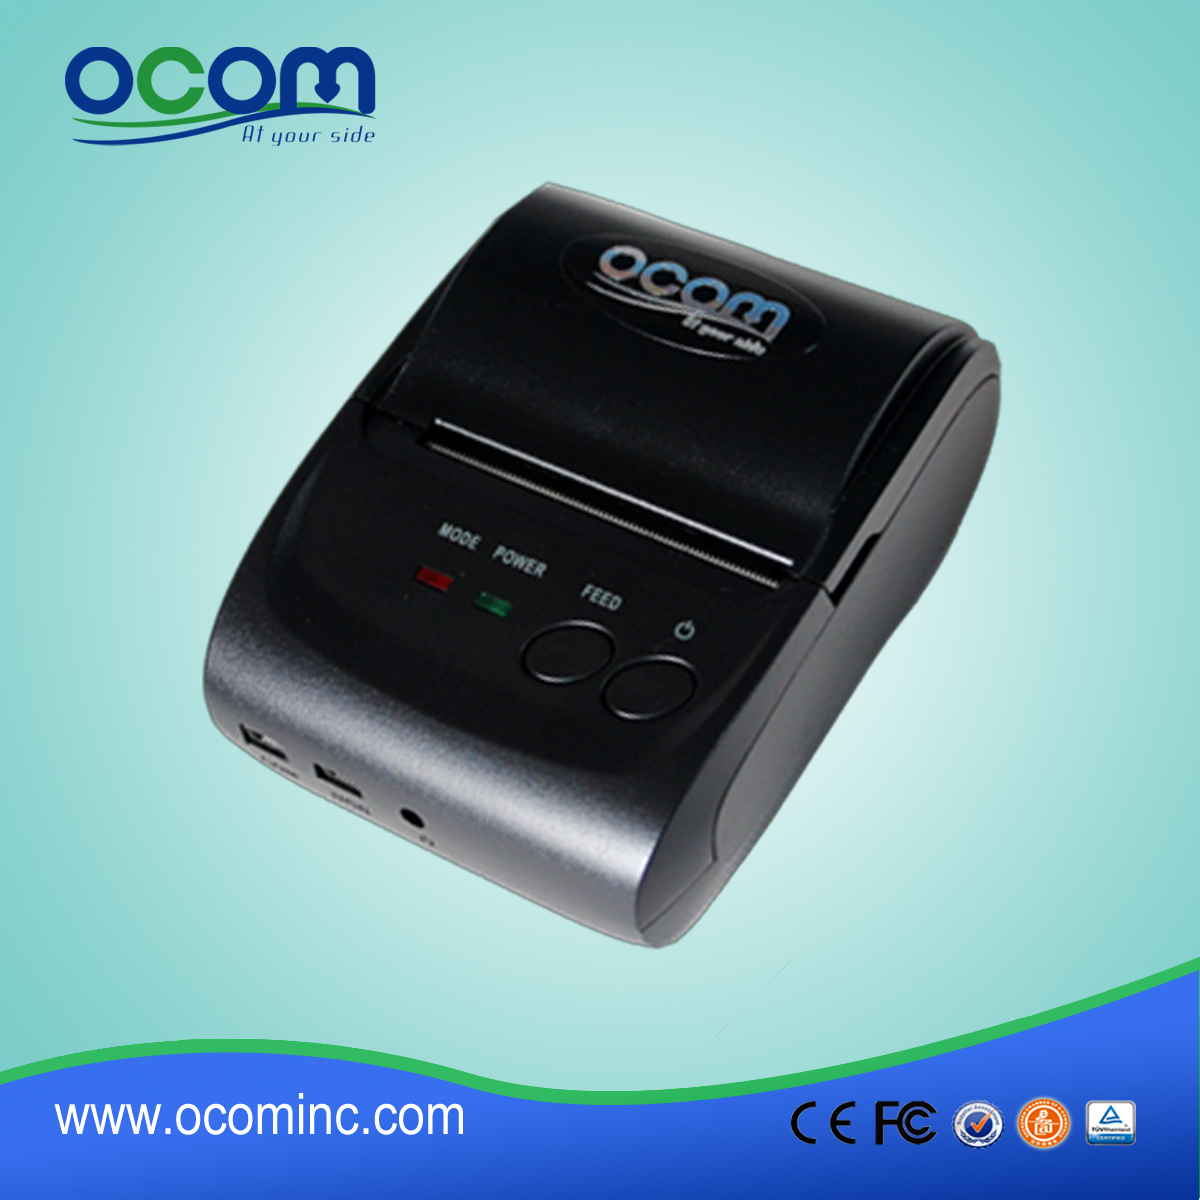 OCPP-M05: 2015 υψηλής ποιότητας μίνι θερμικό εκτυπωτή παραλαβή, το Android θερμικό εκτυπωτή